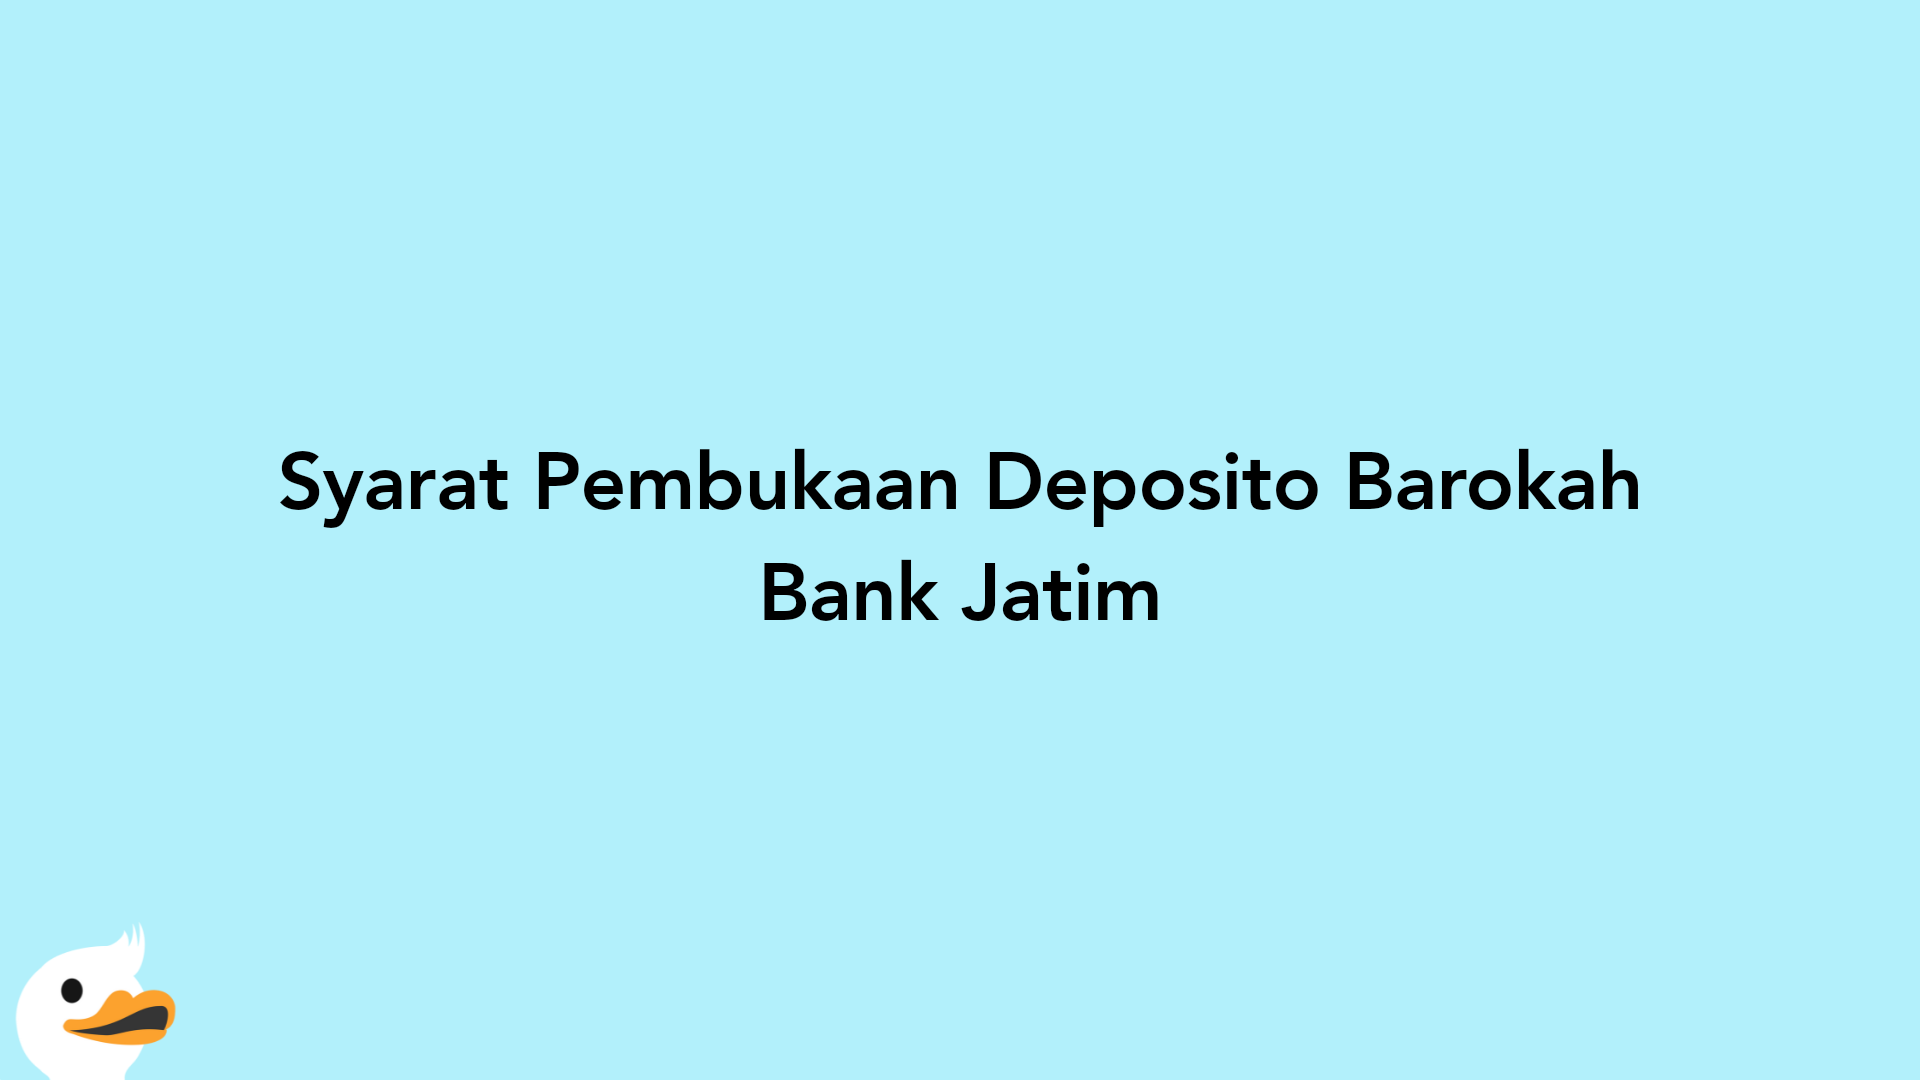 Syarat Pembukaan Deposito Barokah Bank Jatim